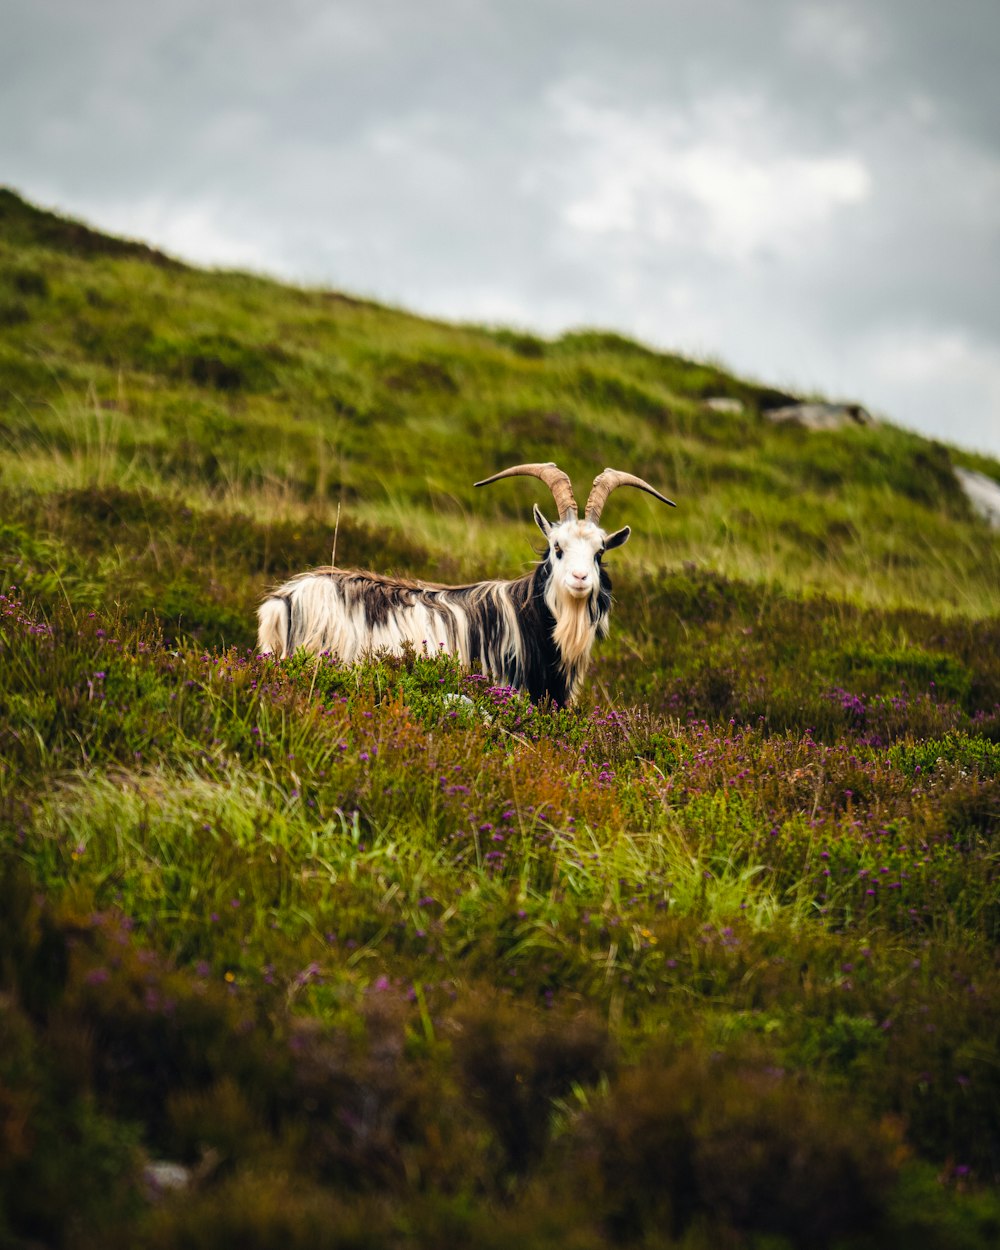 a goat lying in a grassy field